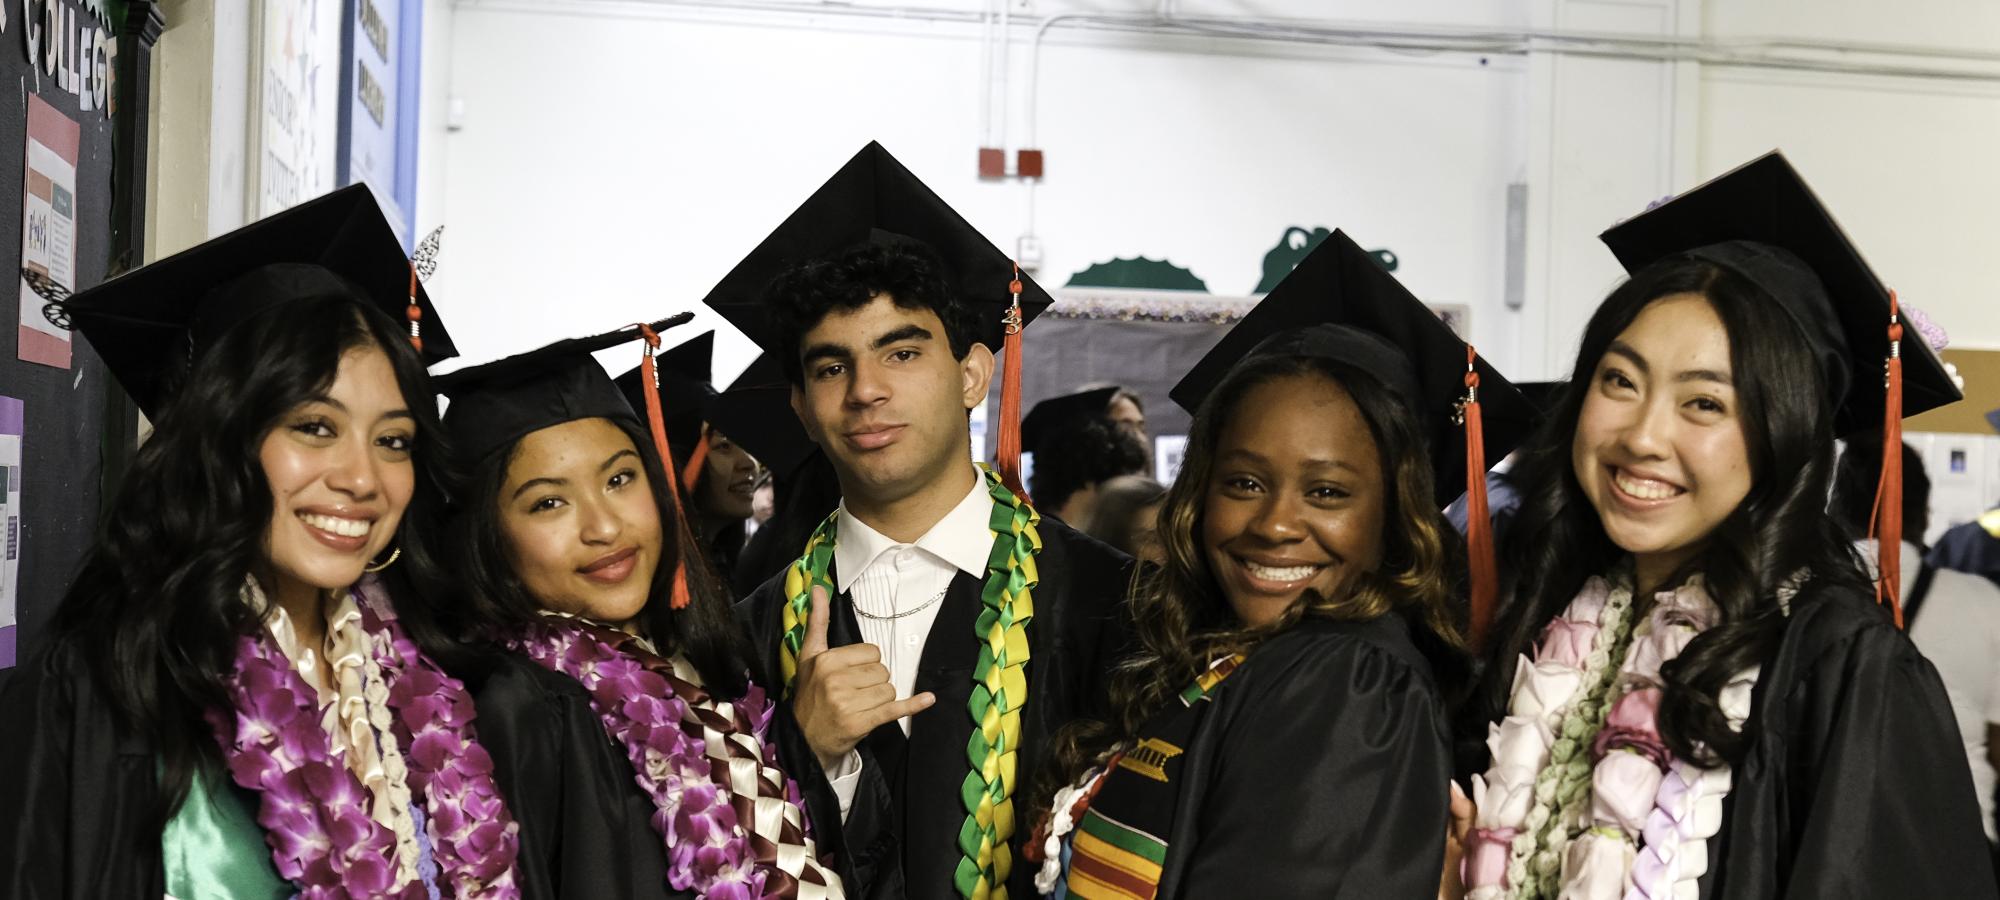 Students pose at graduation